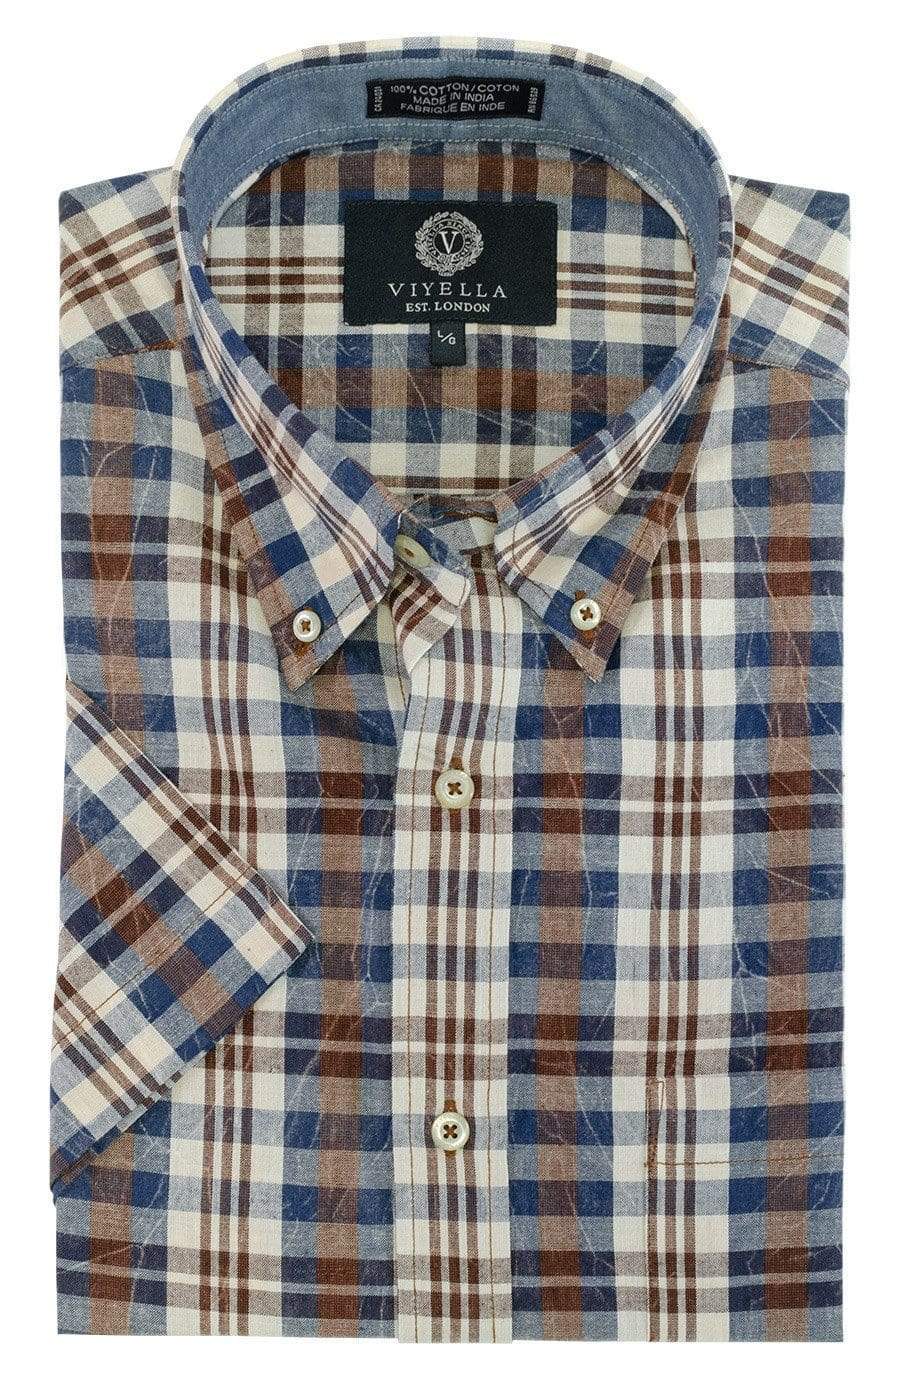 Viyella Brown and Blue Plaid 100% Cotton Madras Cotton Button Down Short Sleeve Shirts